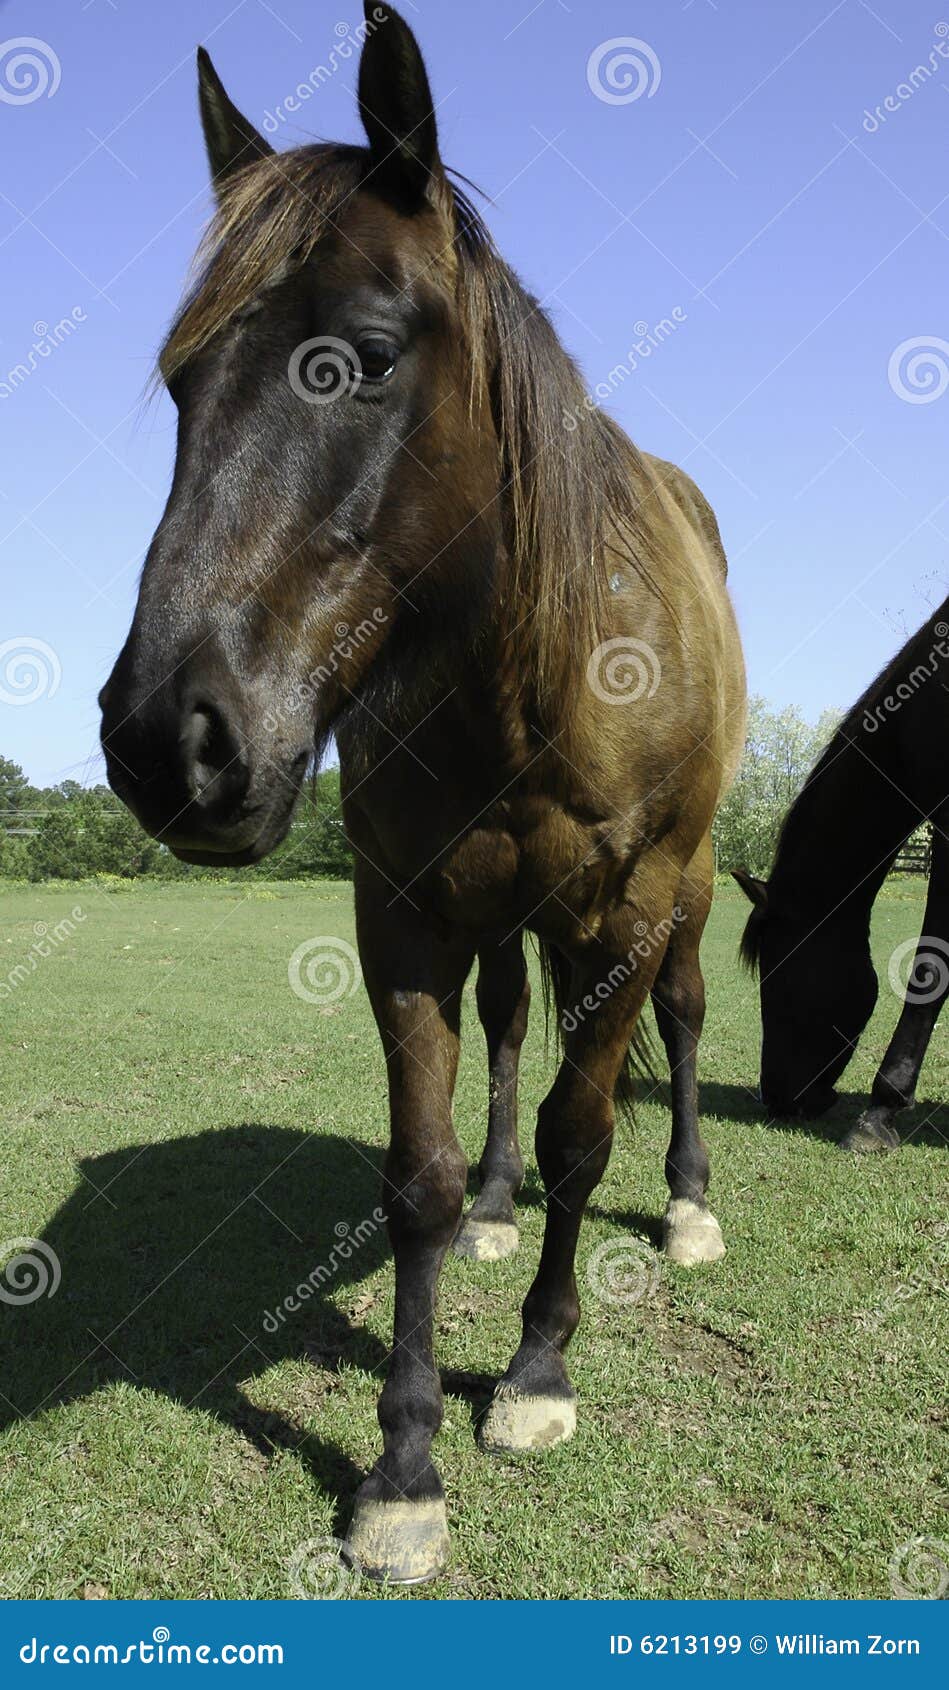 horse pose 6213199